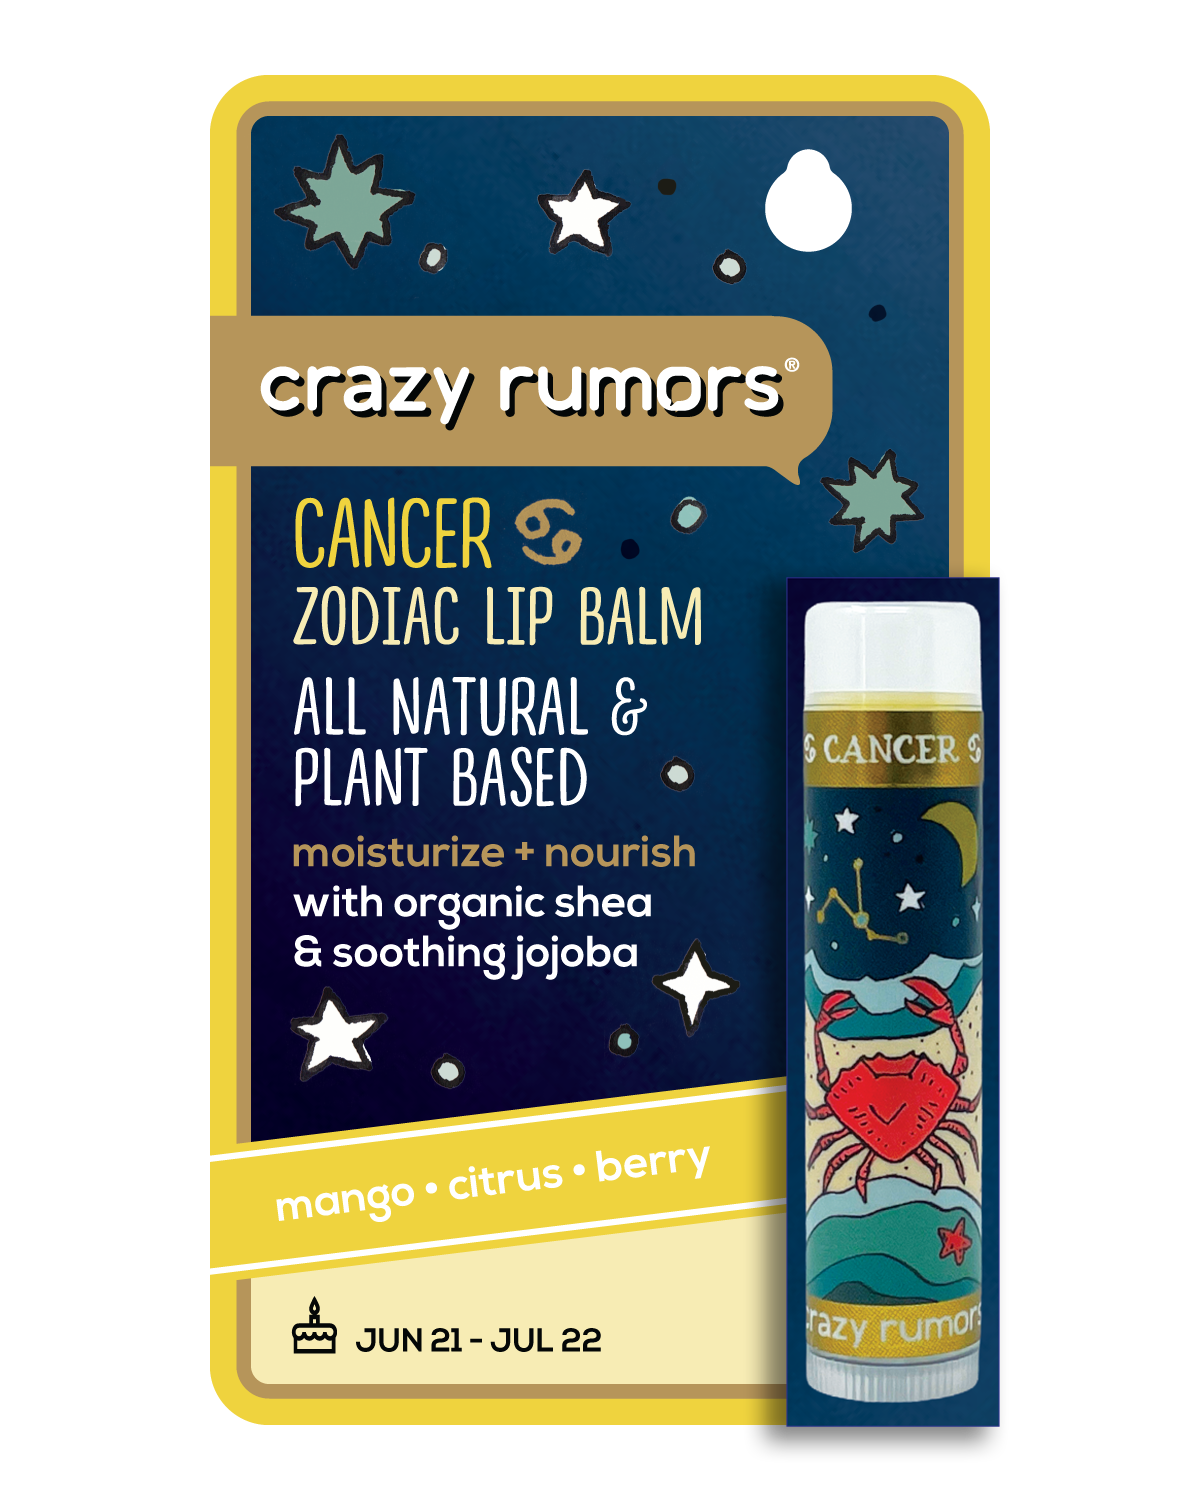 Crazy Rumors - Cancer, Zodiac Lip Balm